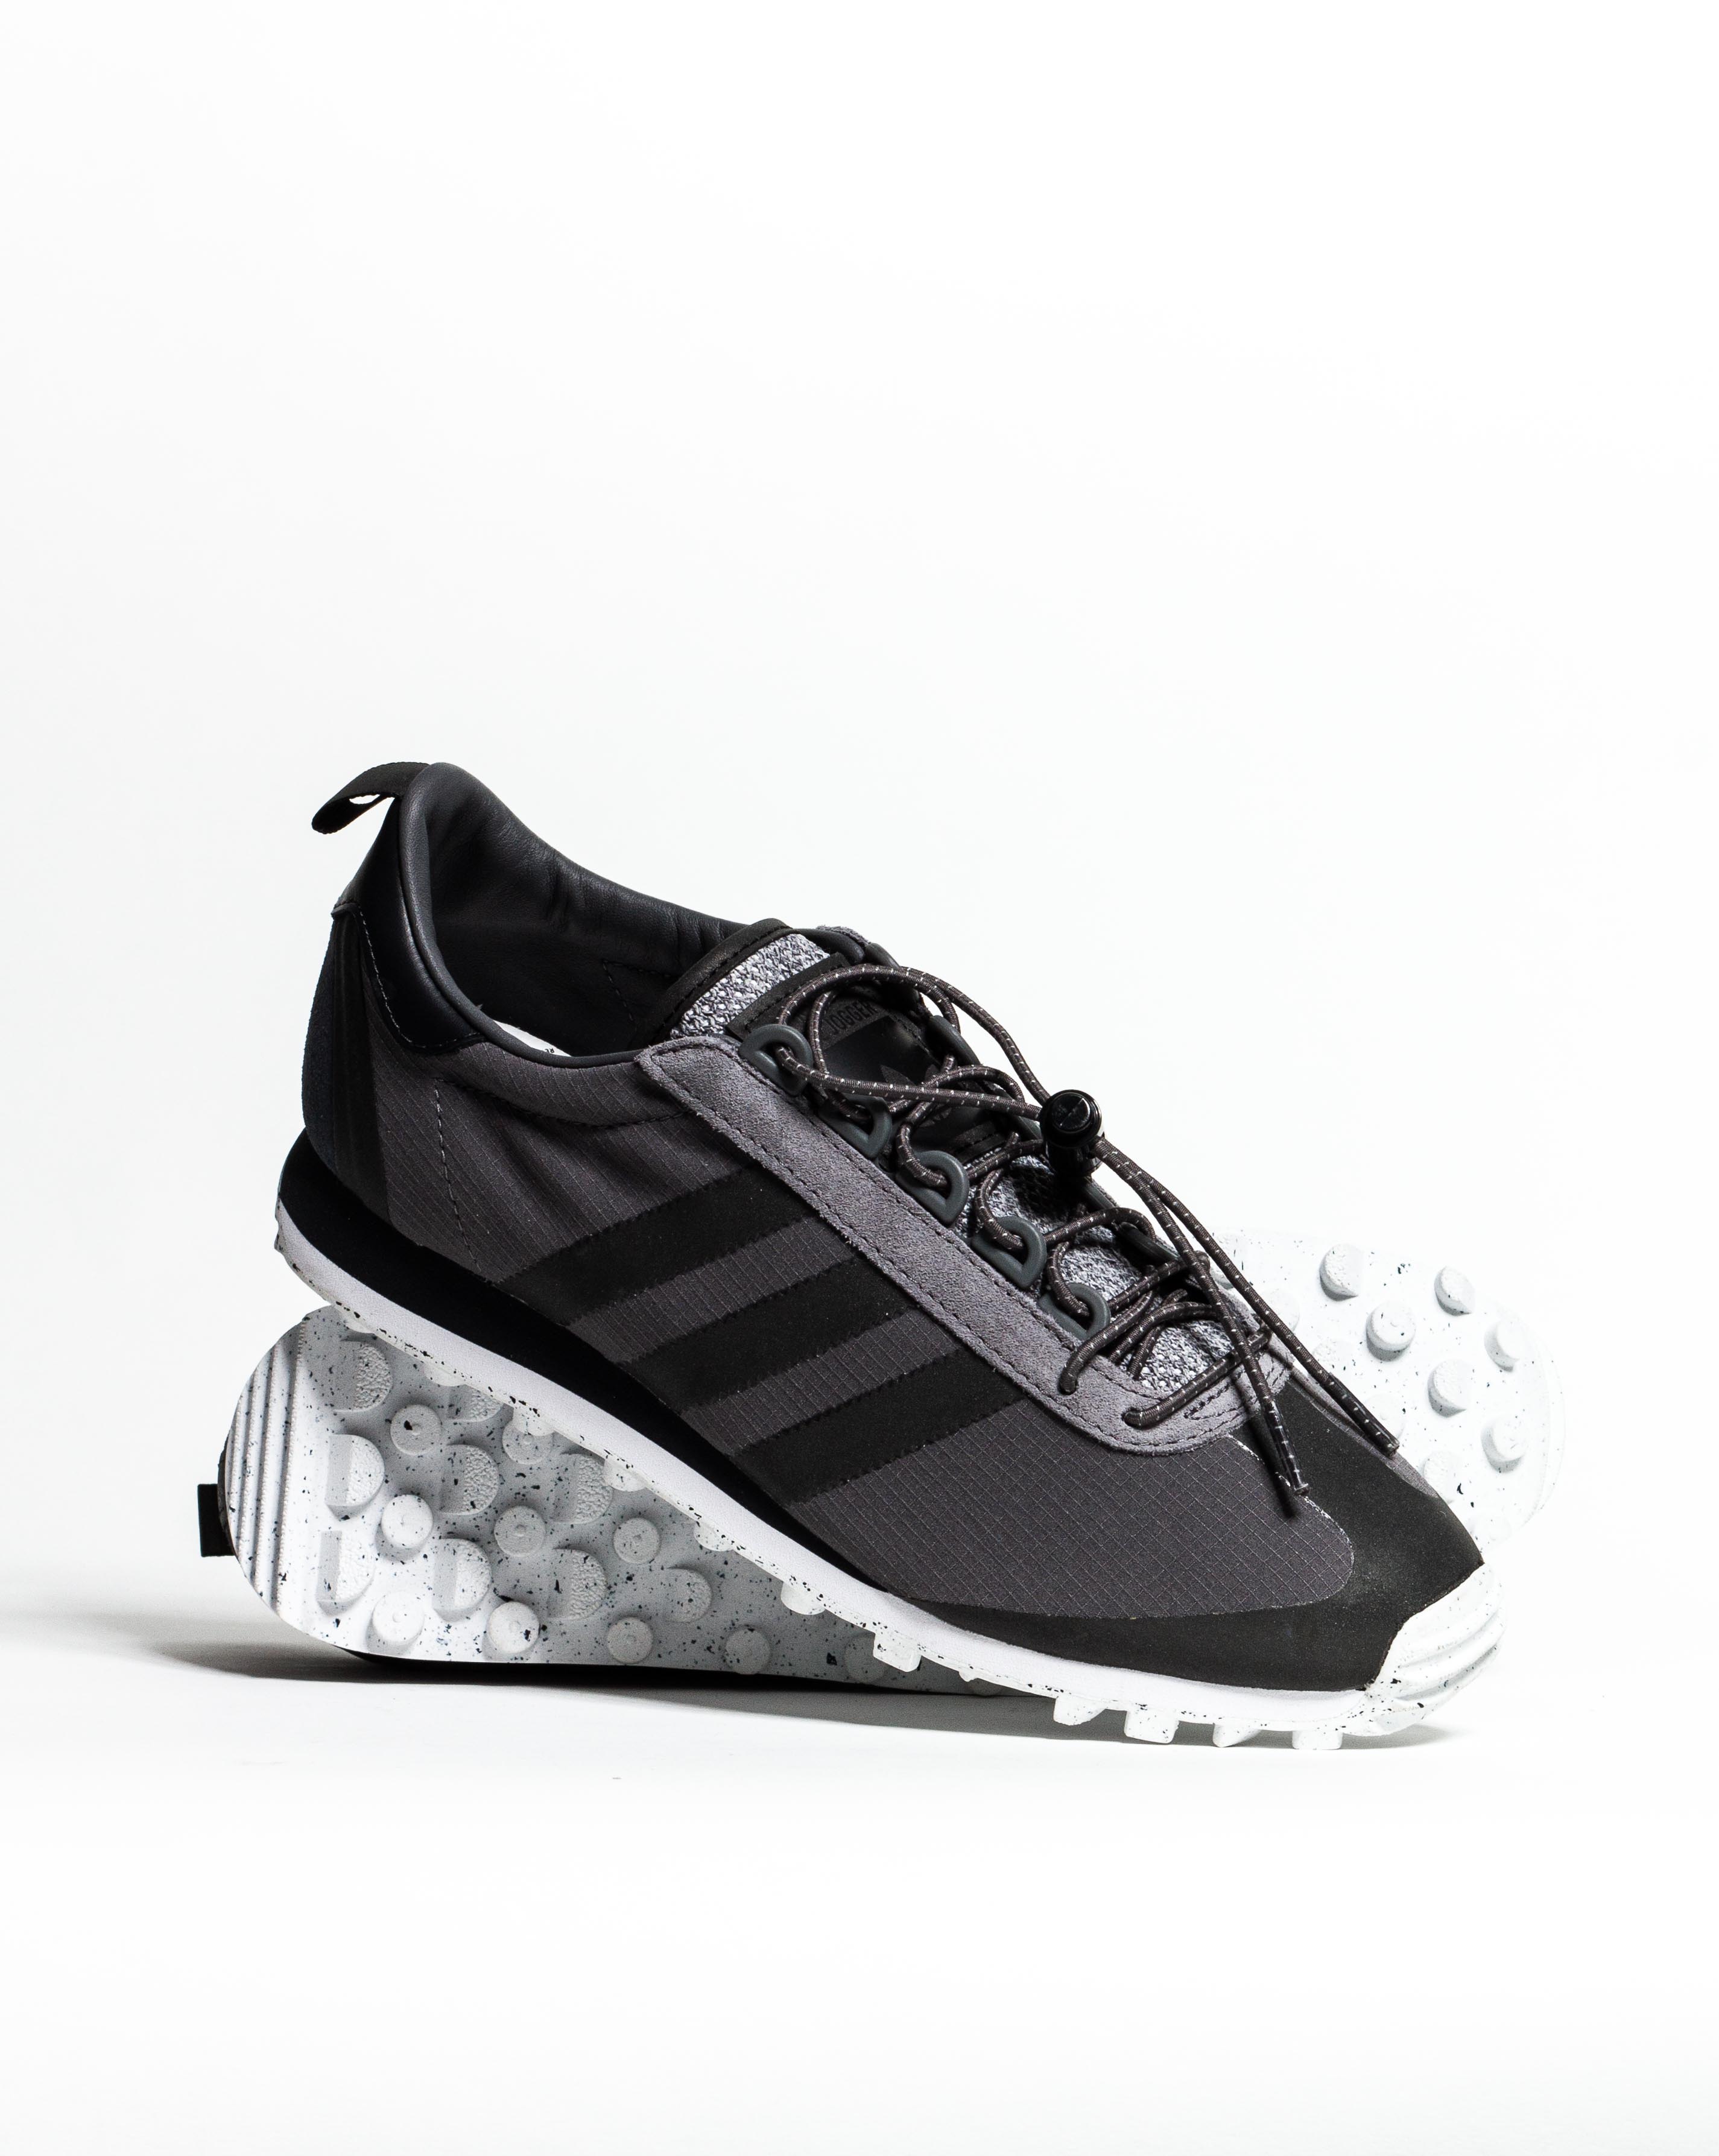 Nite Jogger OG 3M by Adidas Consortium